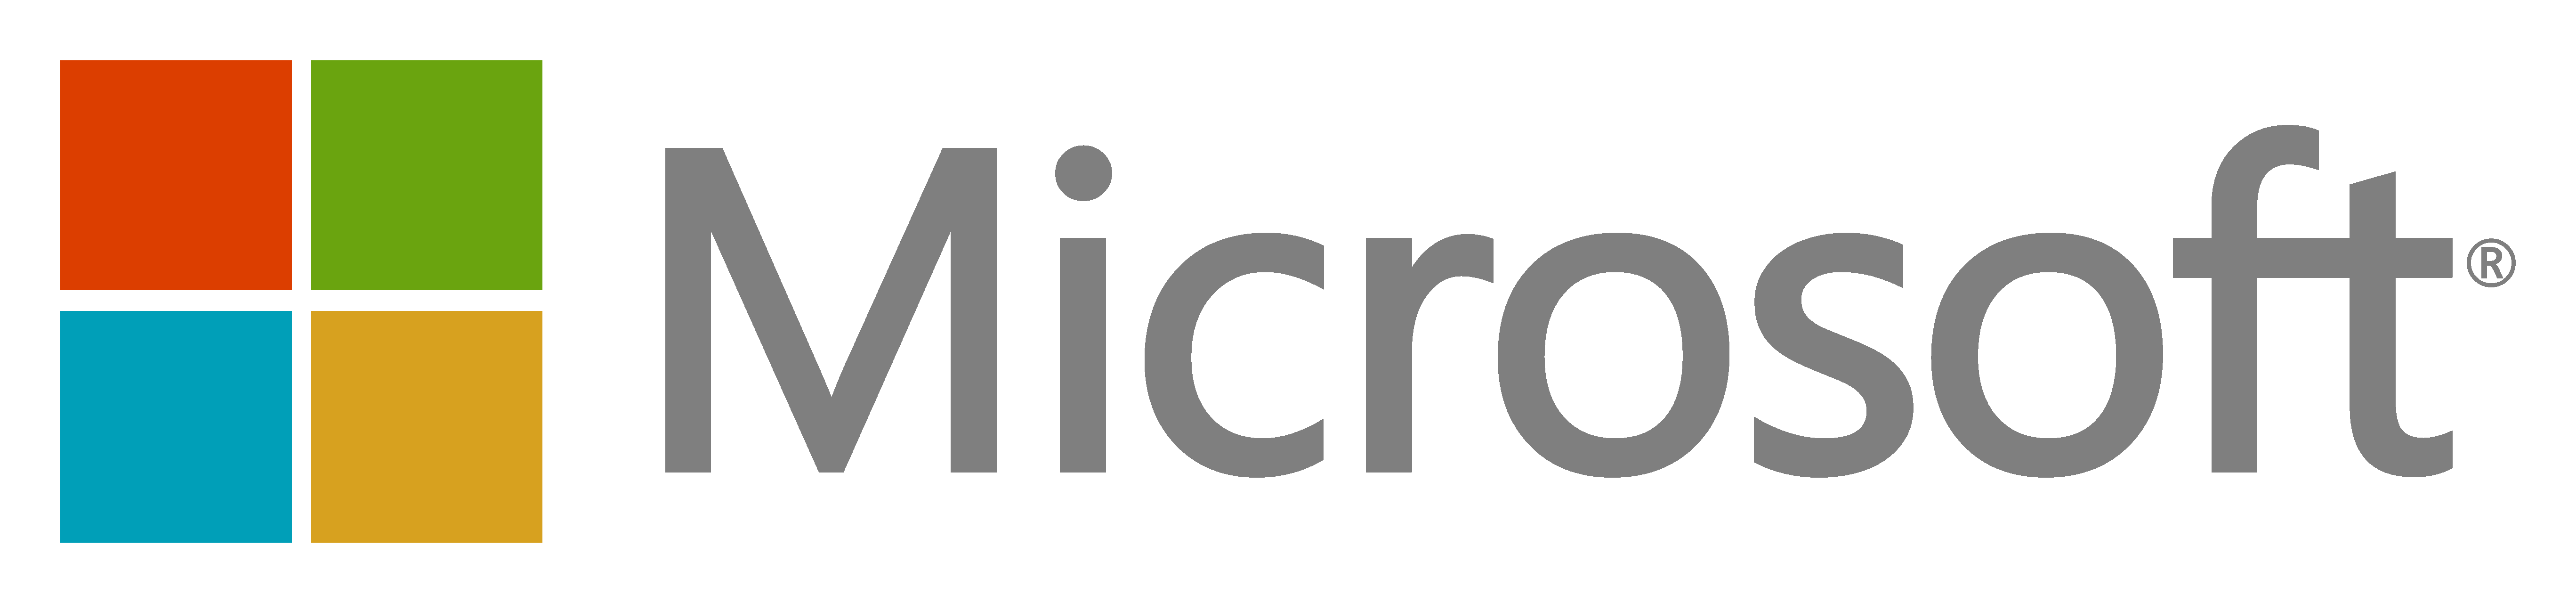 Windows Microsoft Logo Download Transparent PNG Image